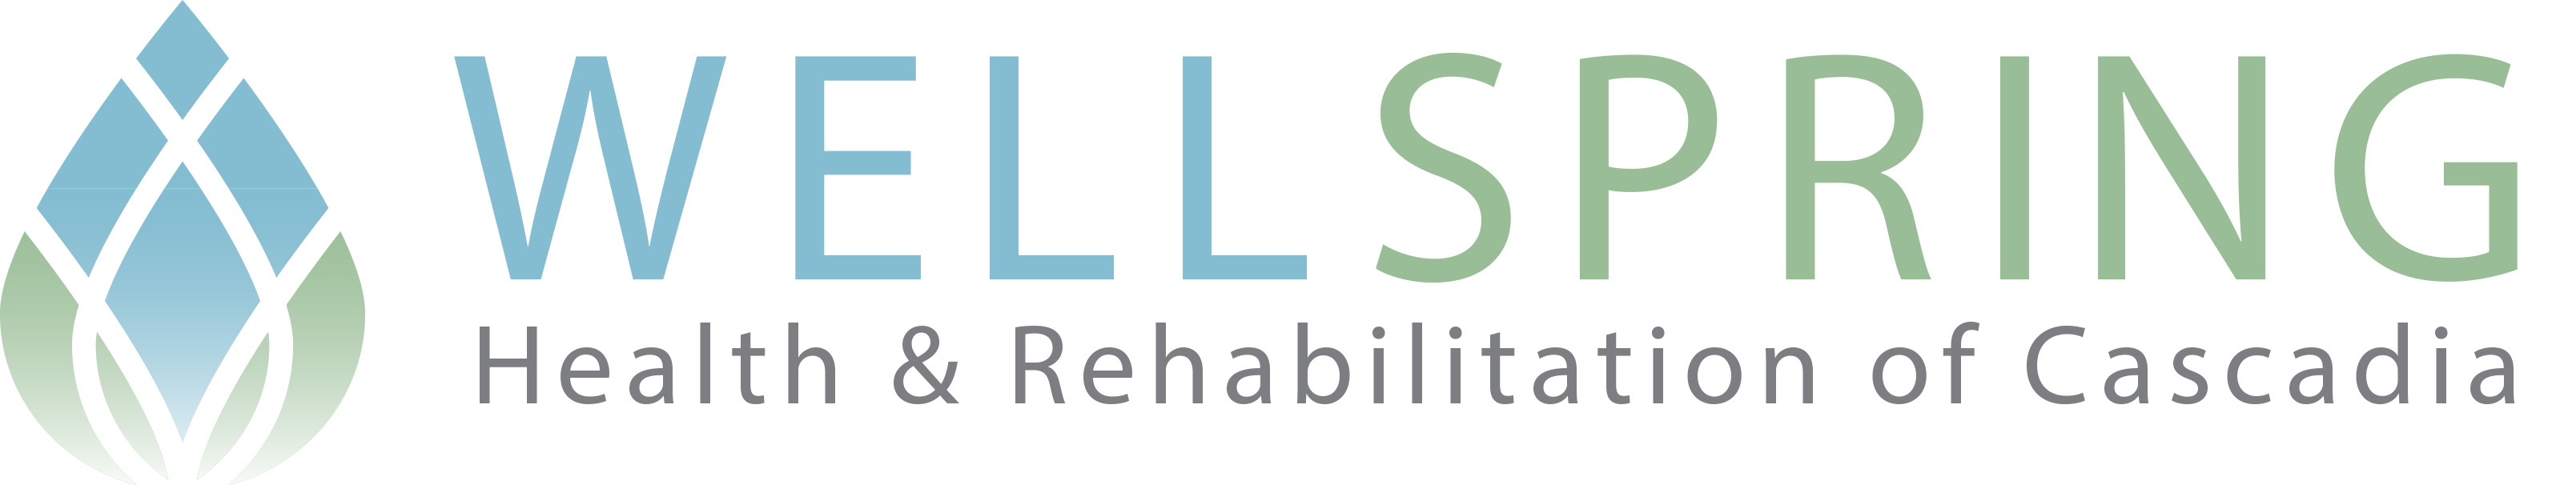 Wellspring Health & Rehabilitation